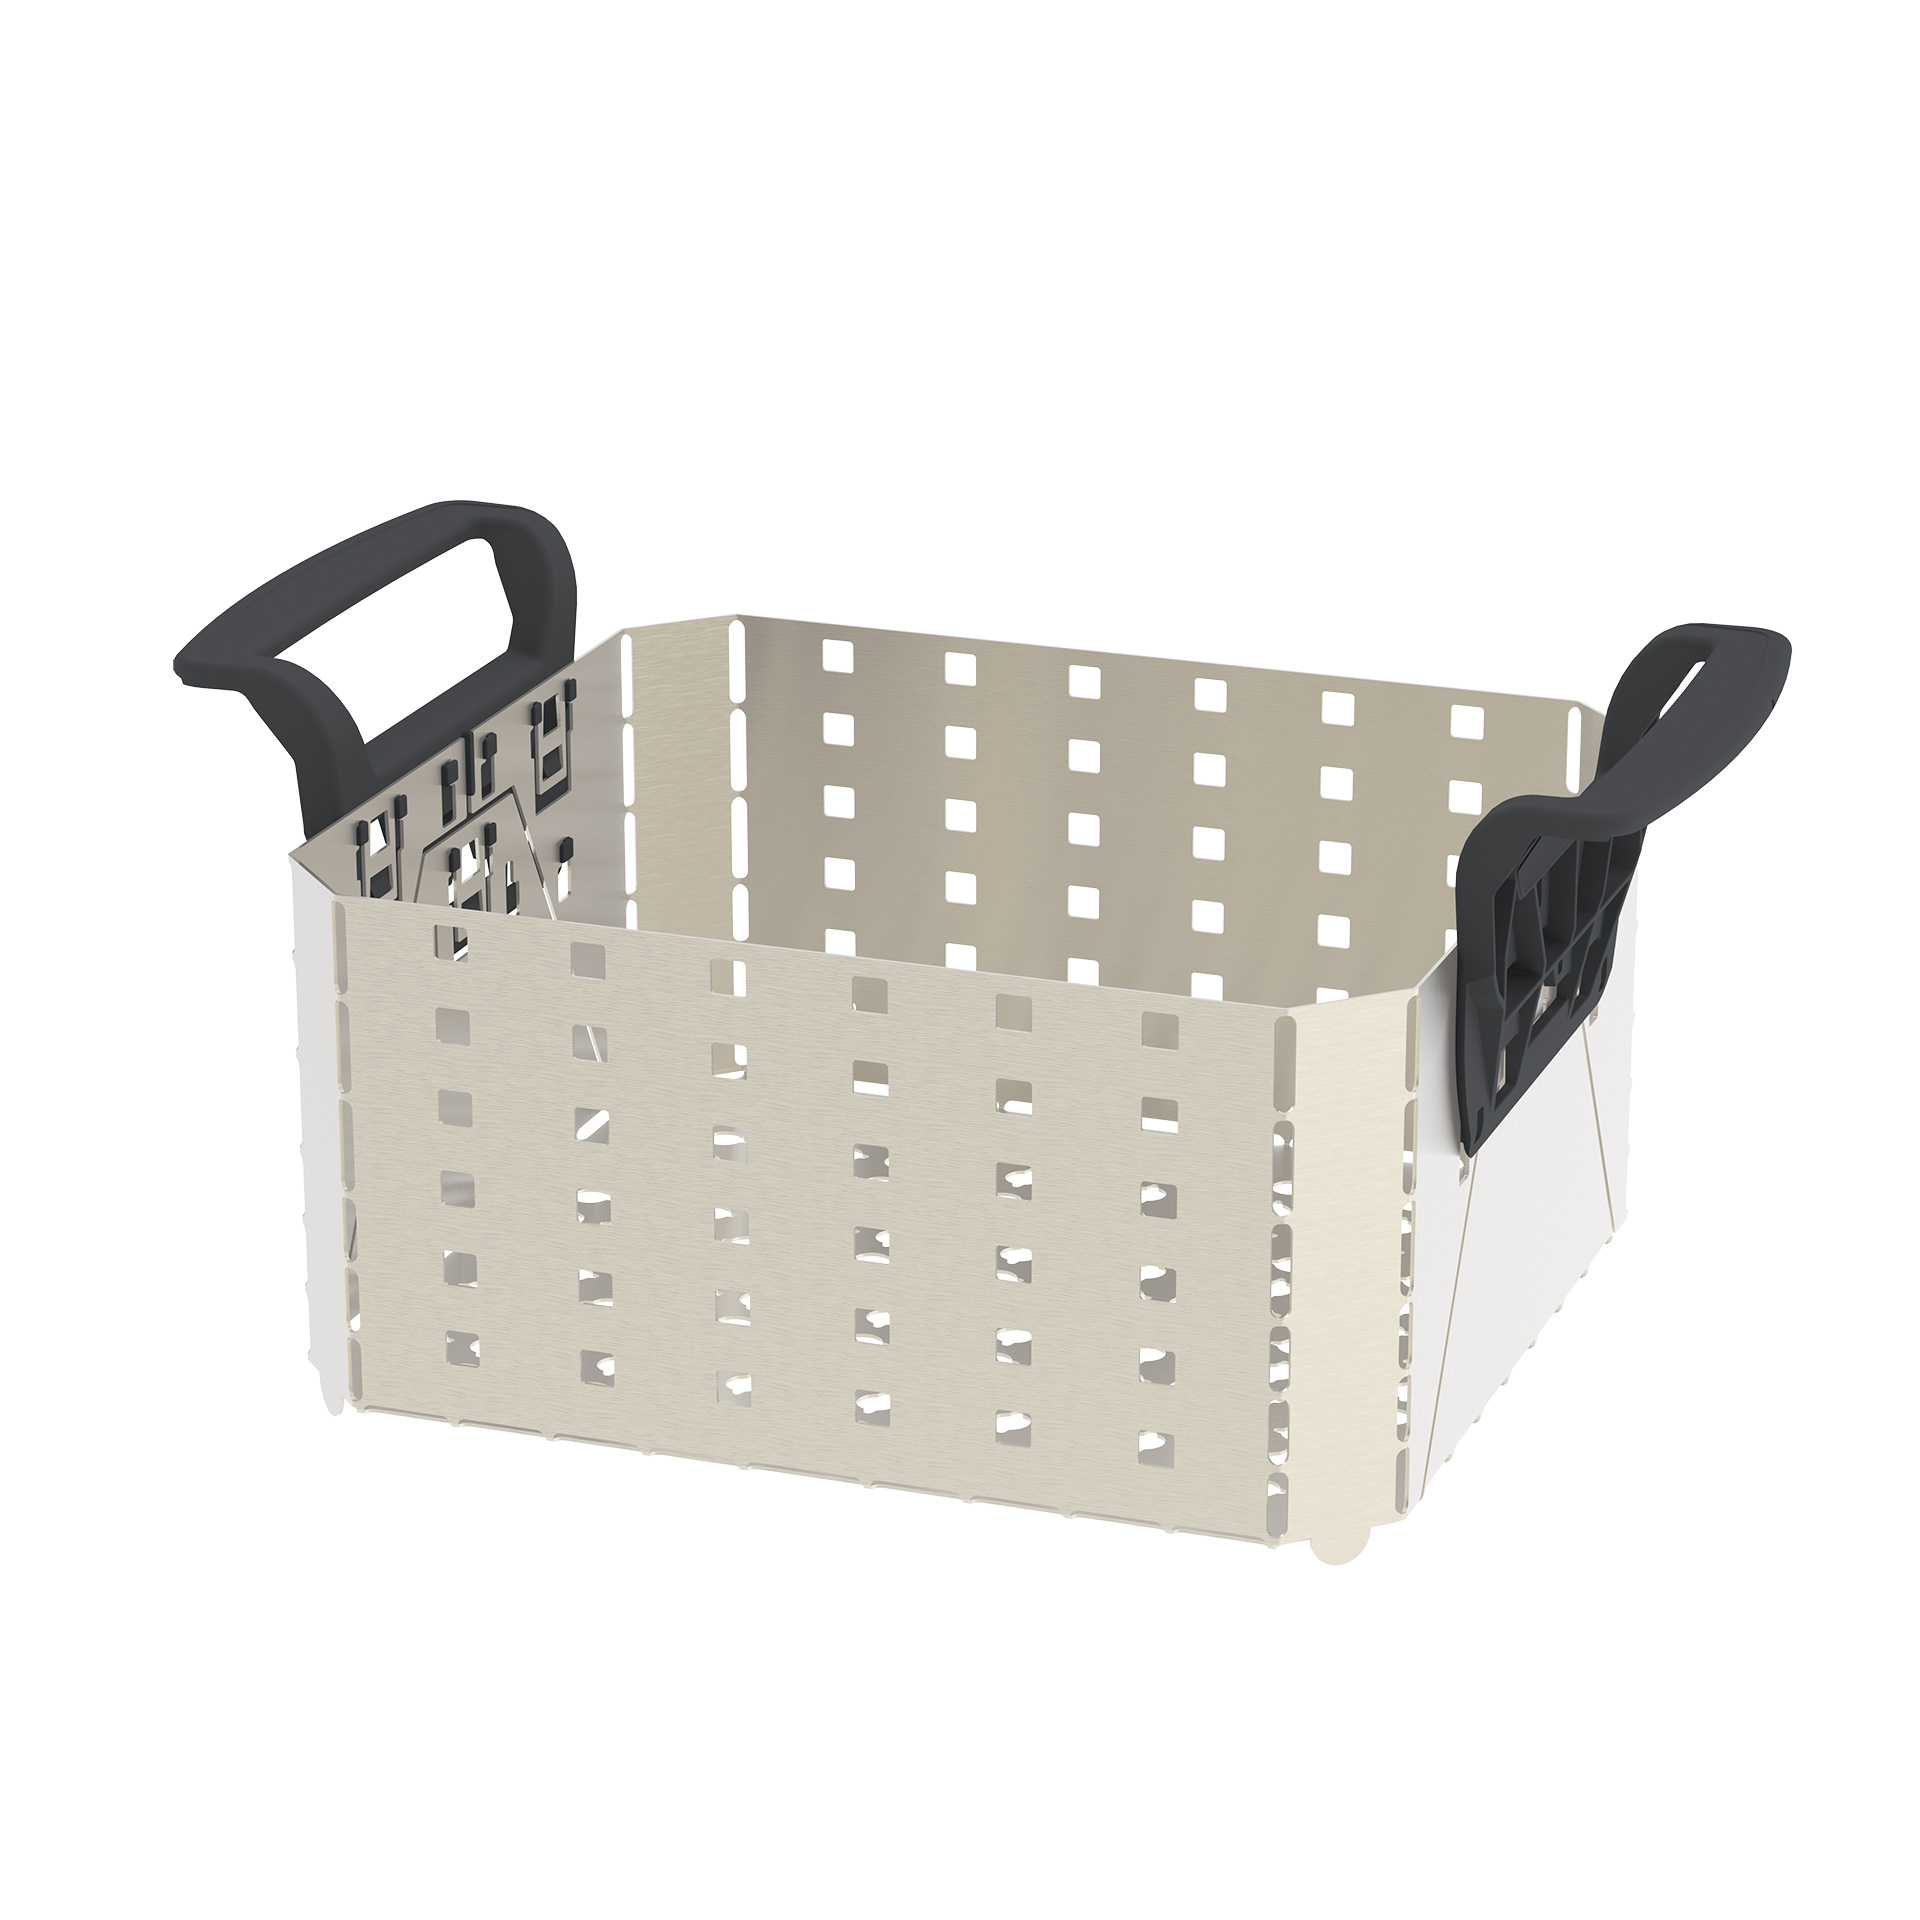 Elma stainless steel basket for Elmasonic 180